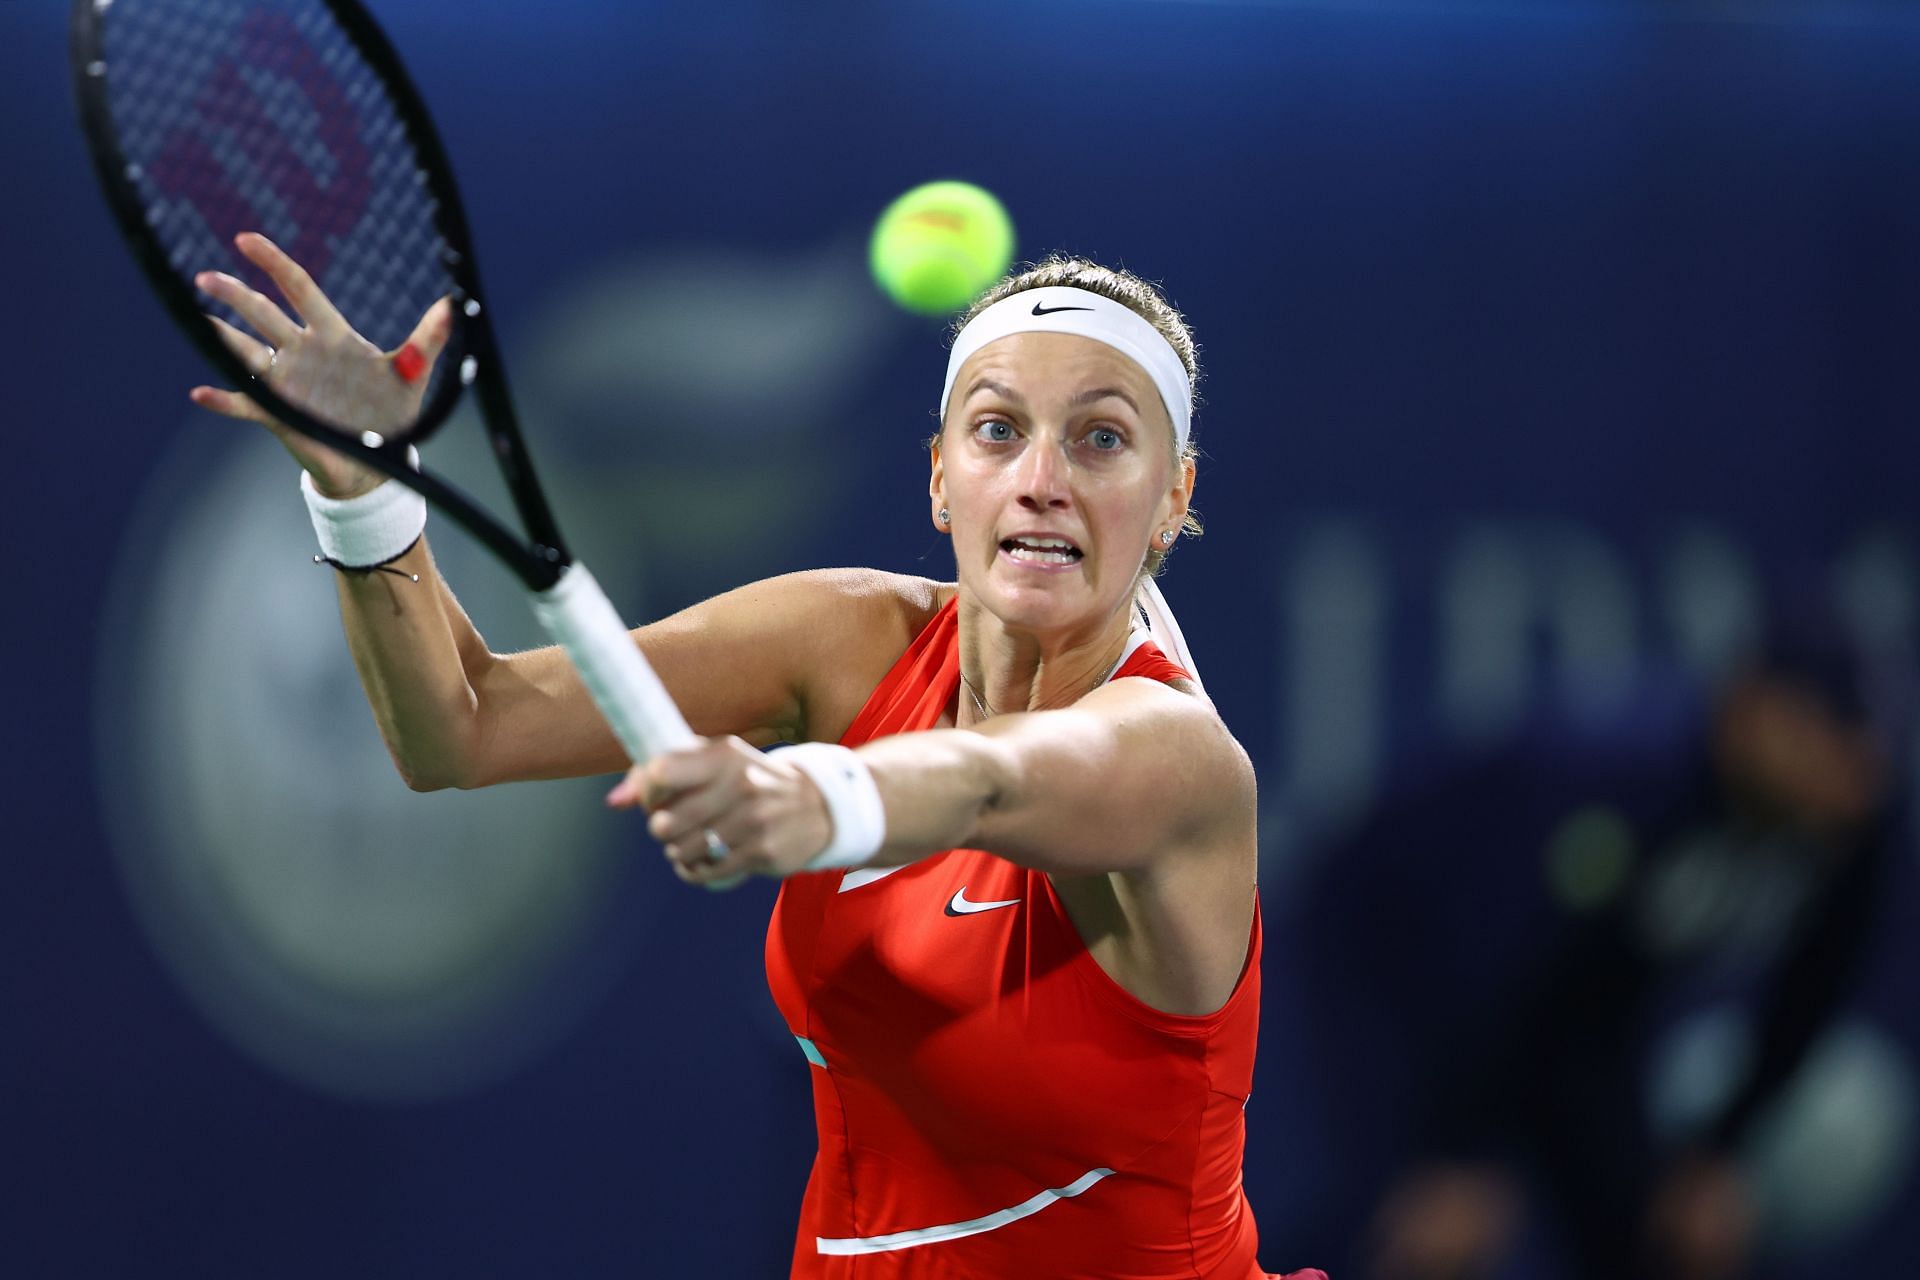 Petra Kvitova slices the ball during her quarterfinal match in Dubai.